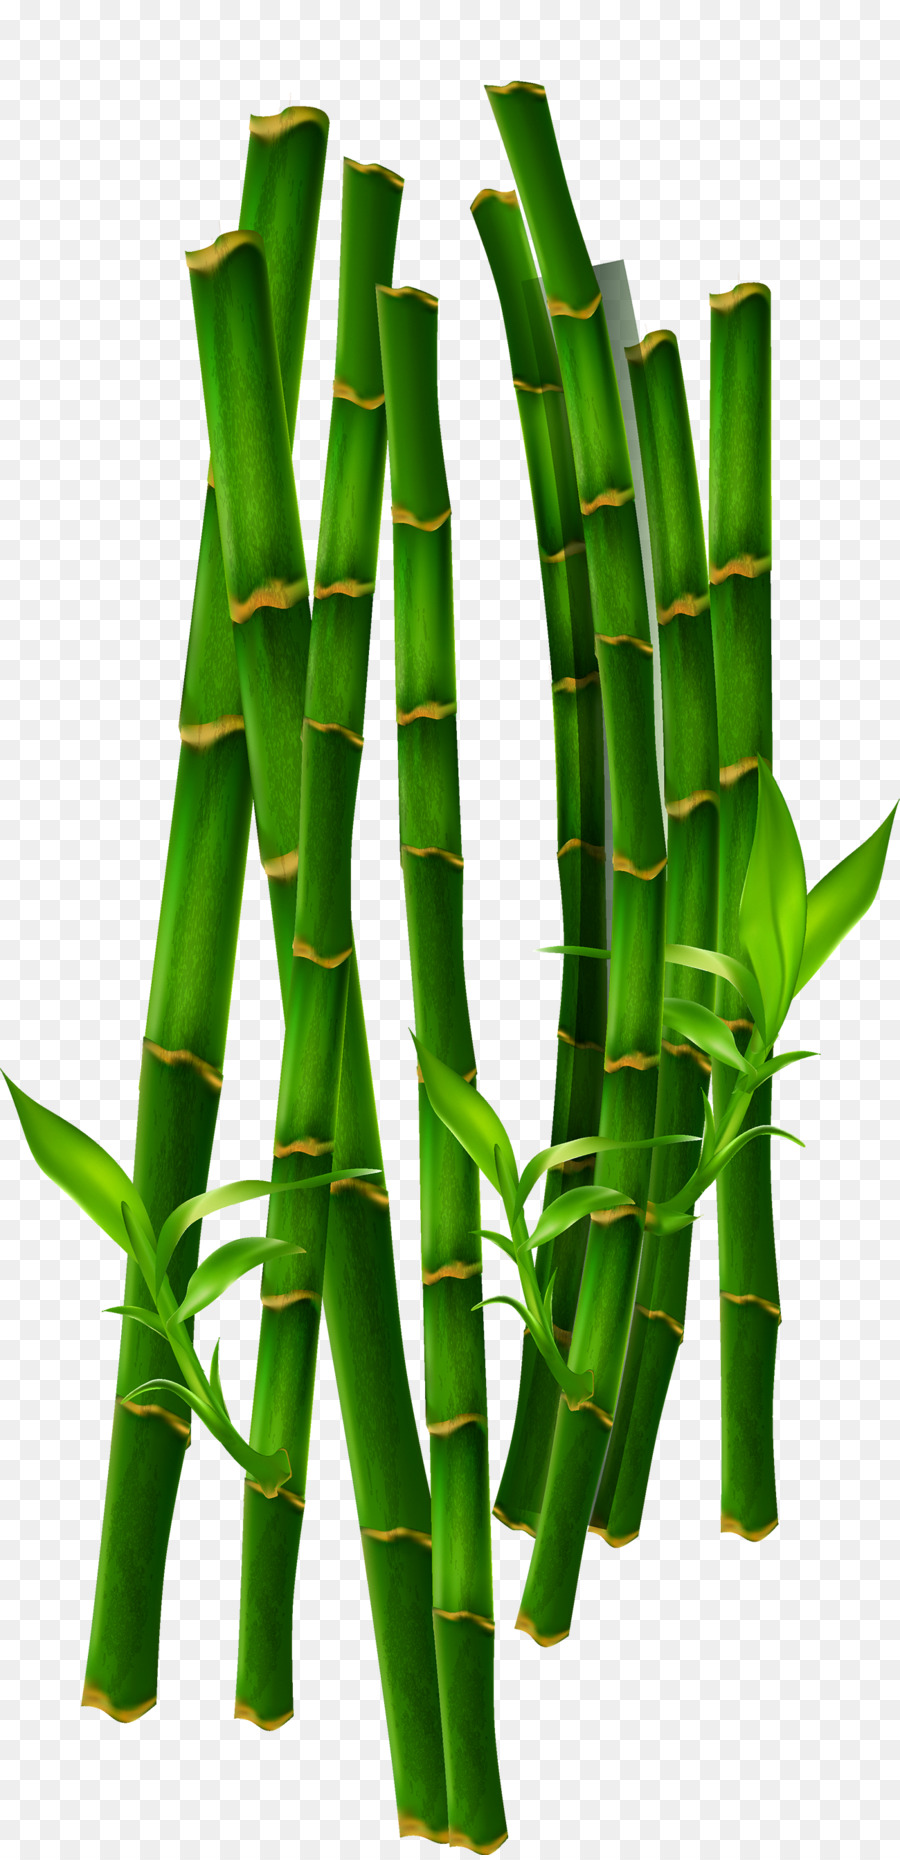 Bamboe Bambus Computer-Datei - Grüner Bambus